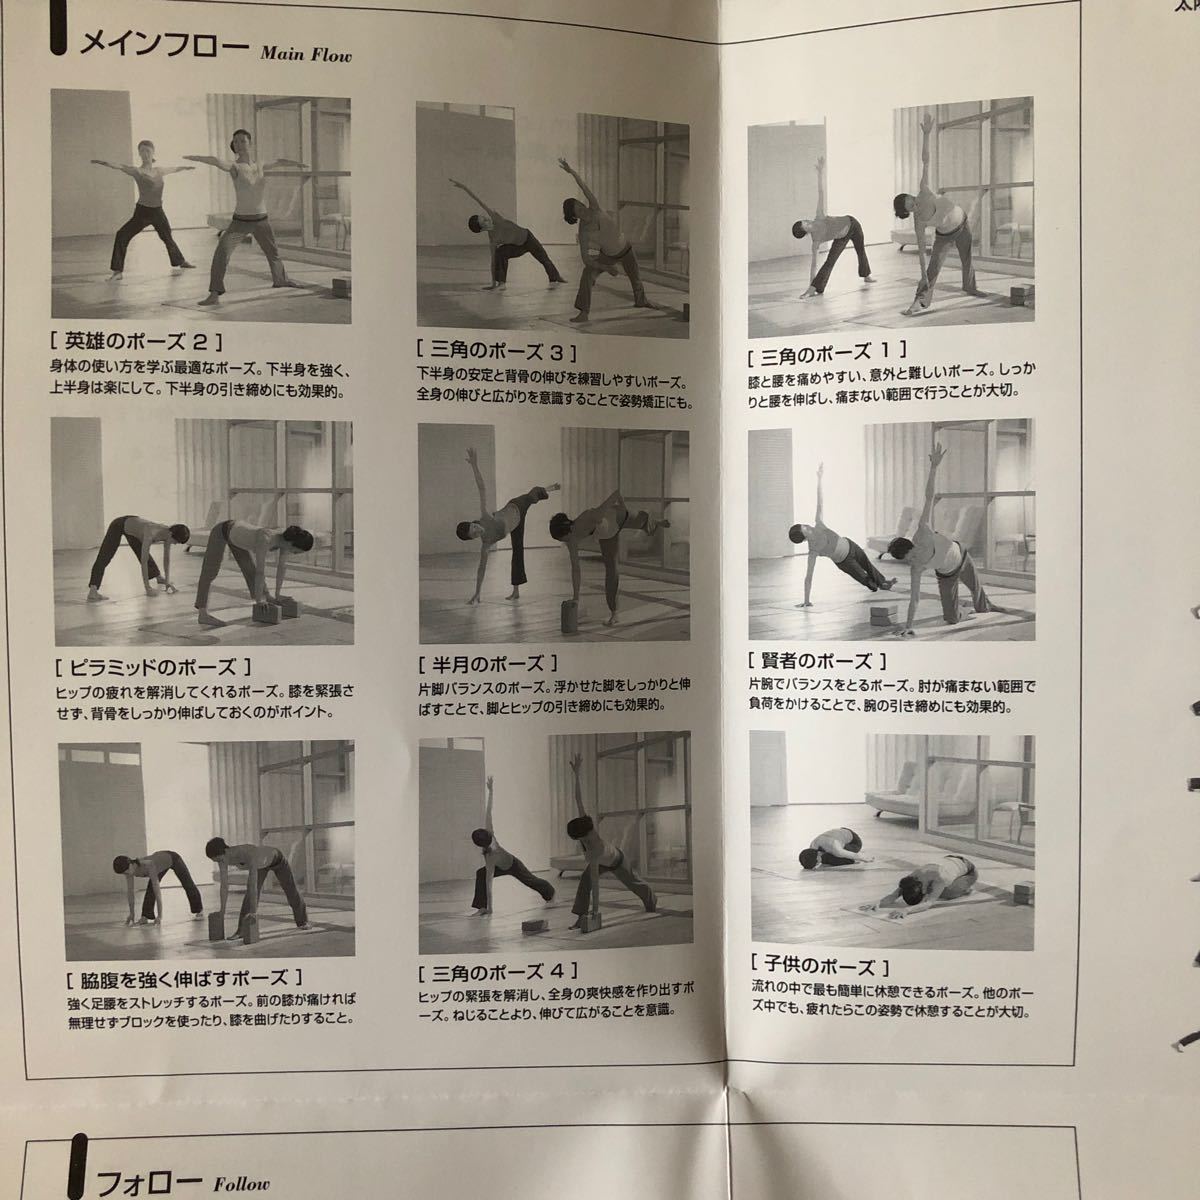 DVD 綿本彰のパワーヨーガ パーフェクトレッスン 再生不良箇所あり 美しいボディライン最新オリジナルプログラム ヨガ yoga